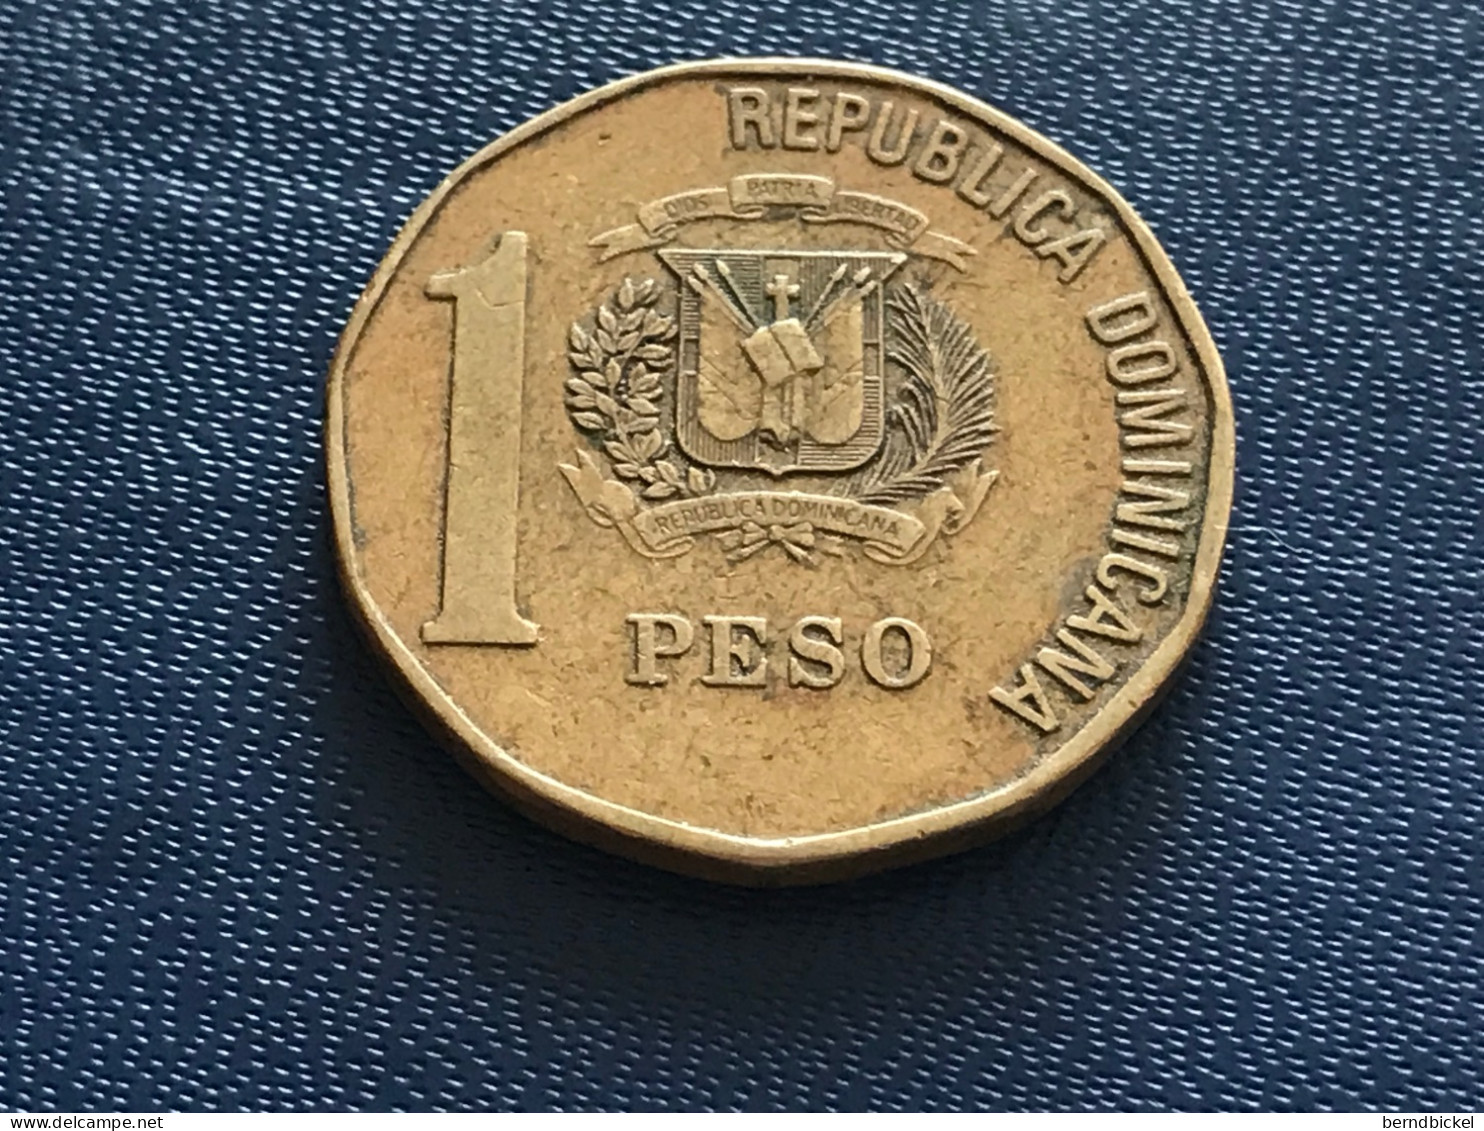 Münze Münzen Umlaufmünze Dominikanische Republik 1 Peso 2005 - Dominicaine